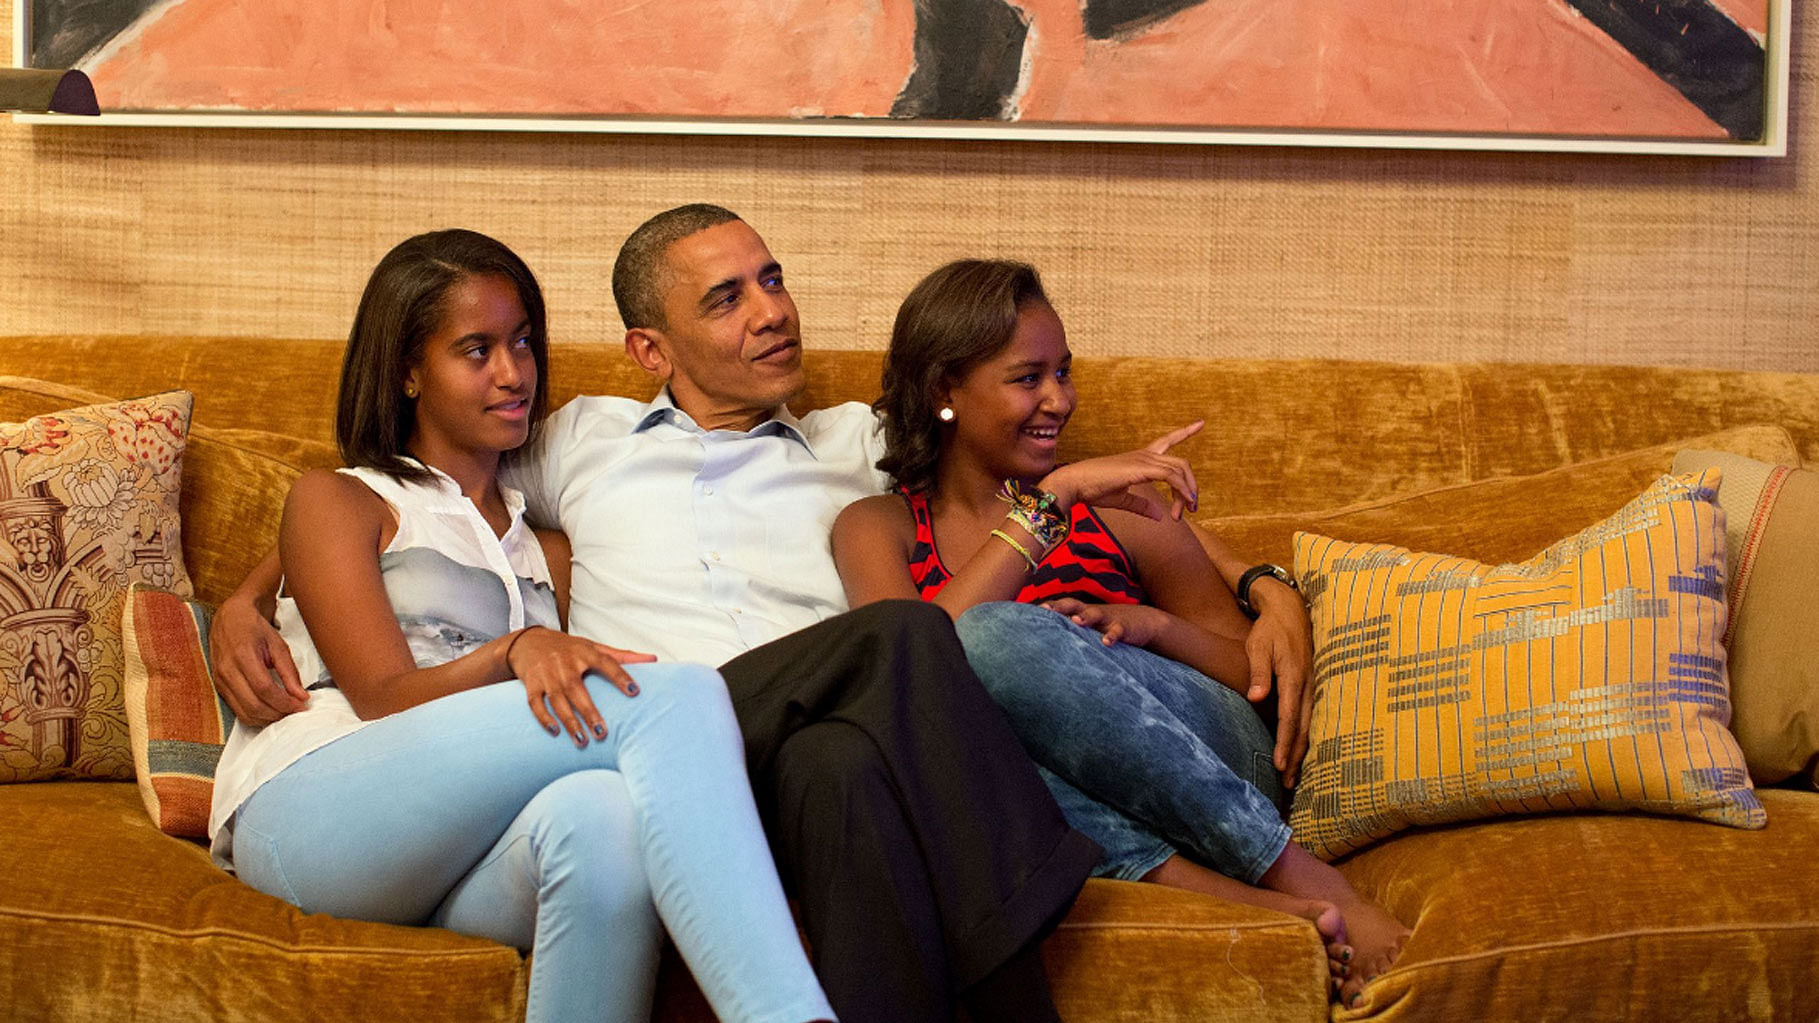 President Obama with his daughters Sasha and Malia. (Photo Courtesy: Twitter/<a href="https://twitter.com/BarackObama">@BarackObama</a>)